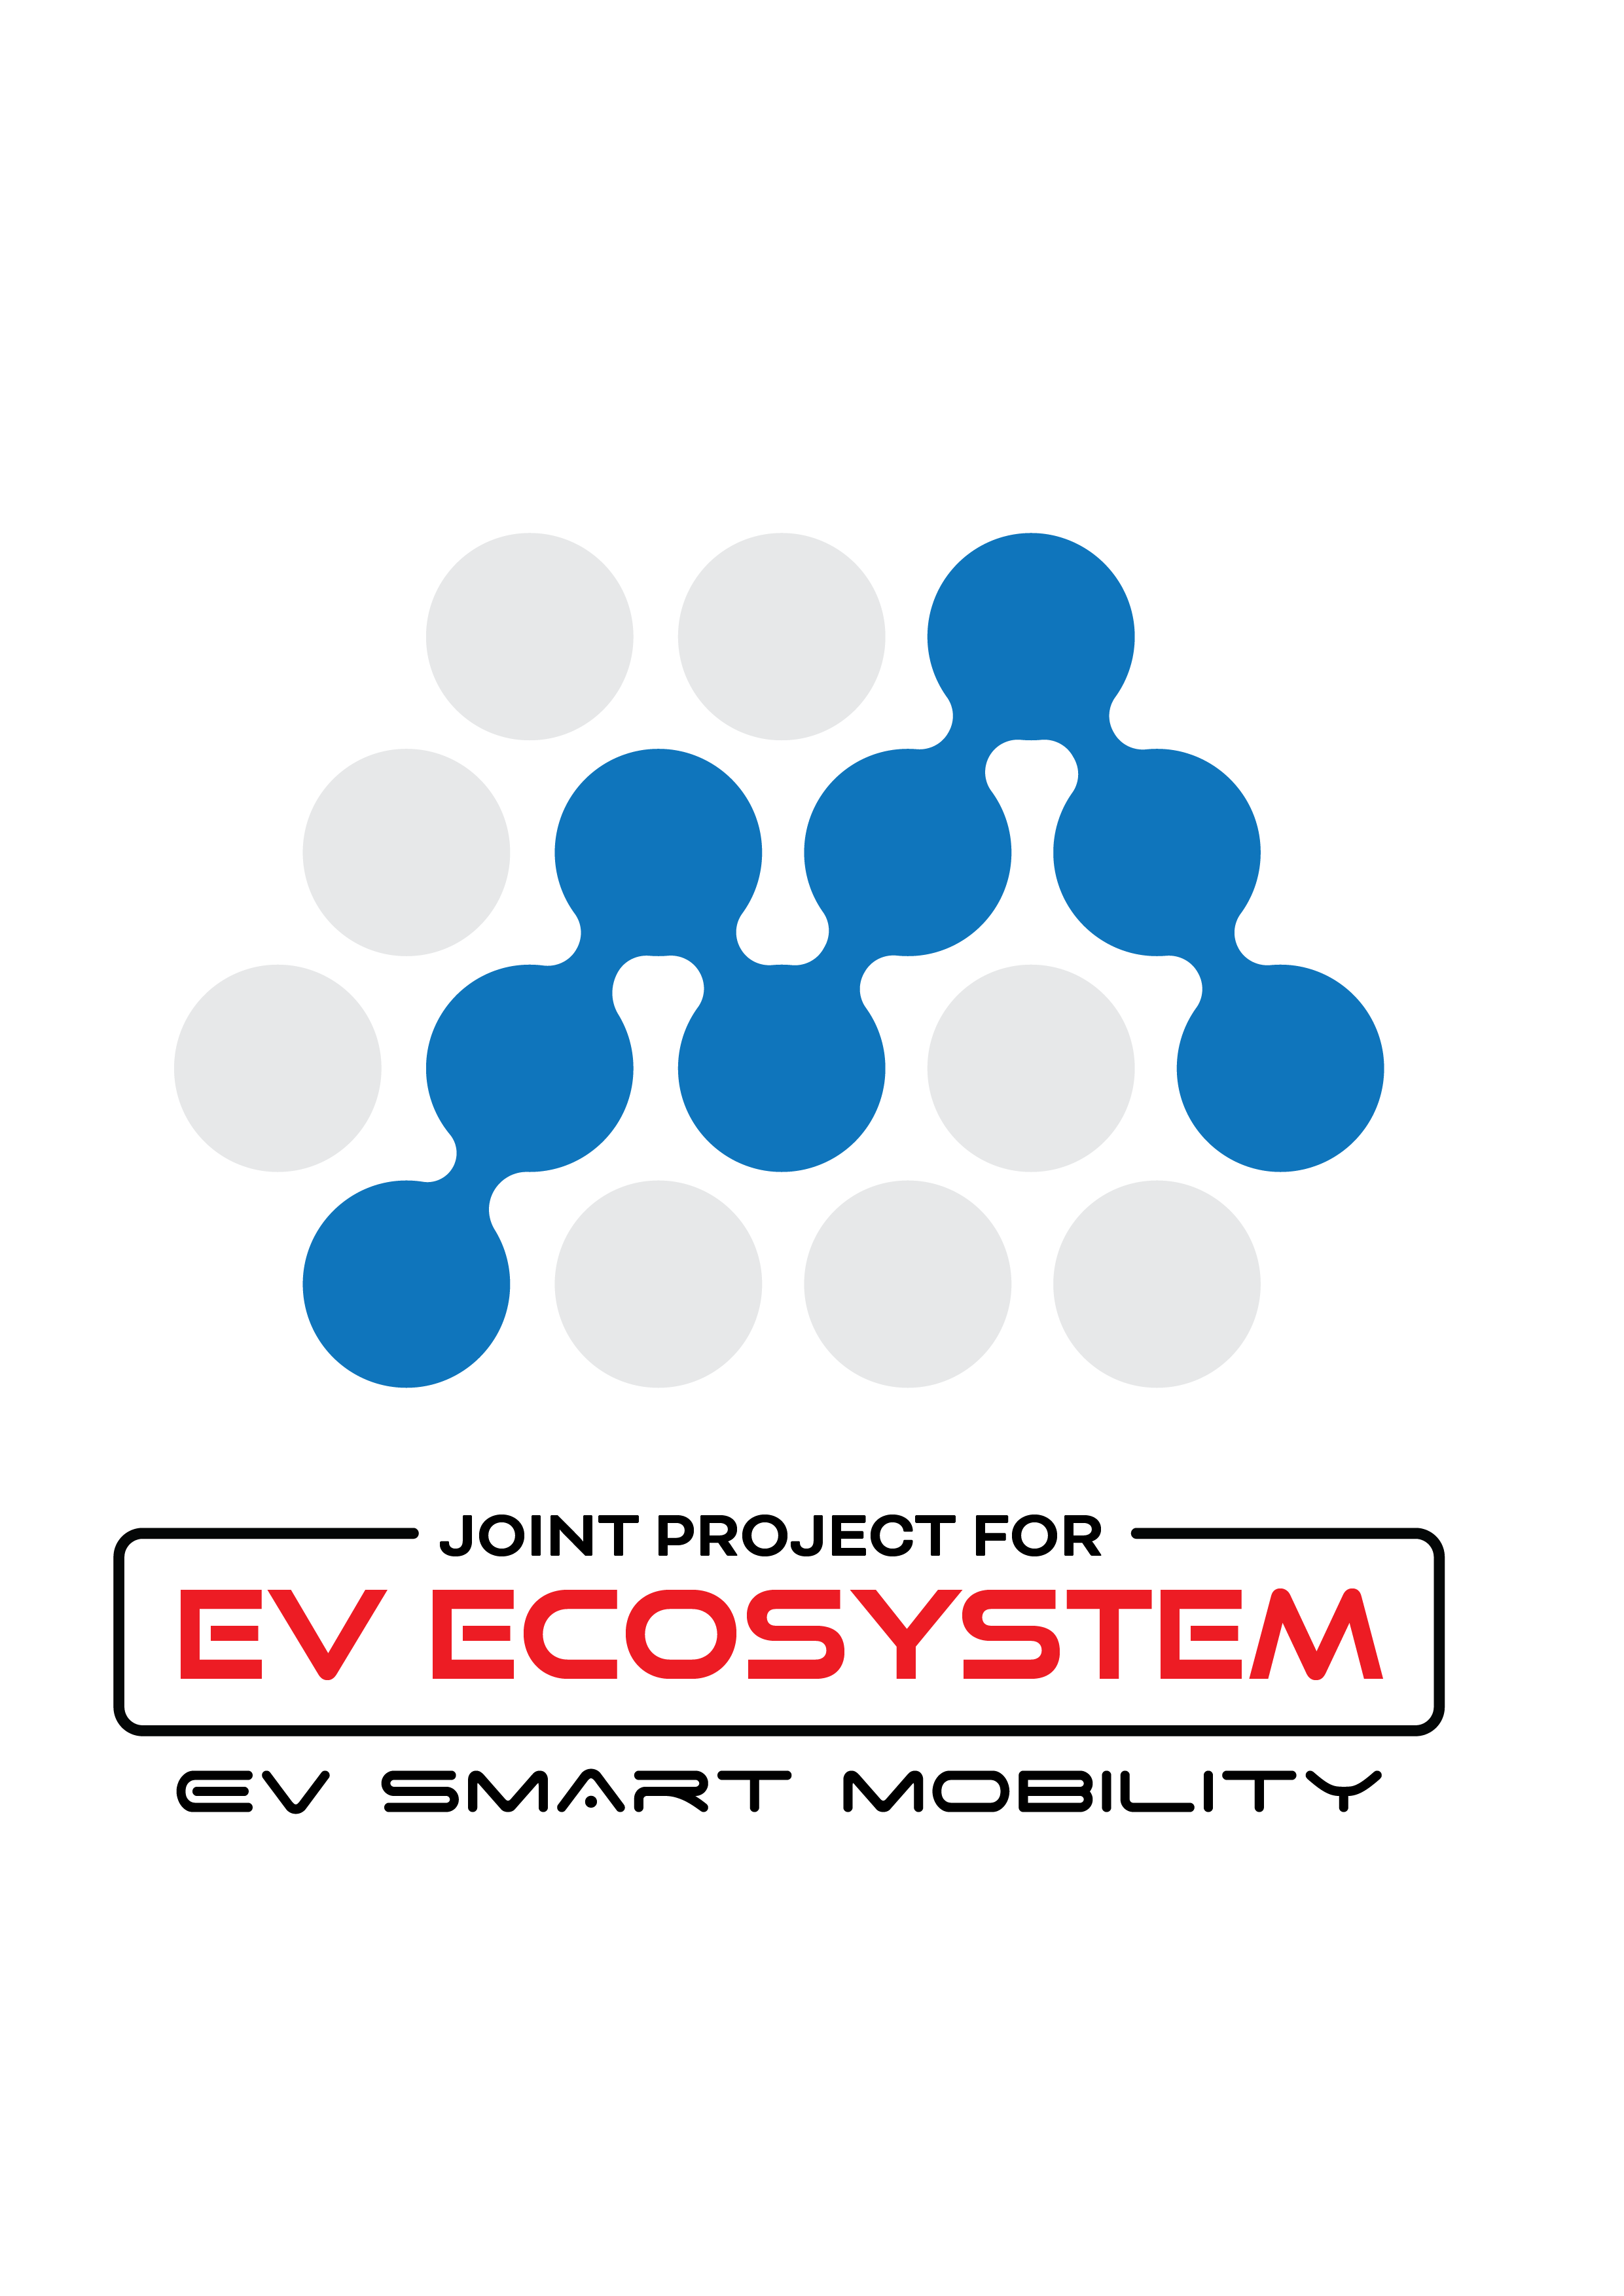 Lima Brand Mobil Berkolaborasi Kembangkan Ekosistem Elektrifikasi di Bali